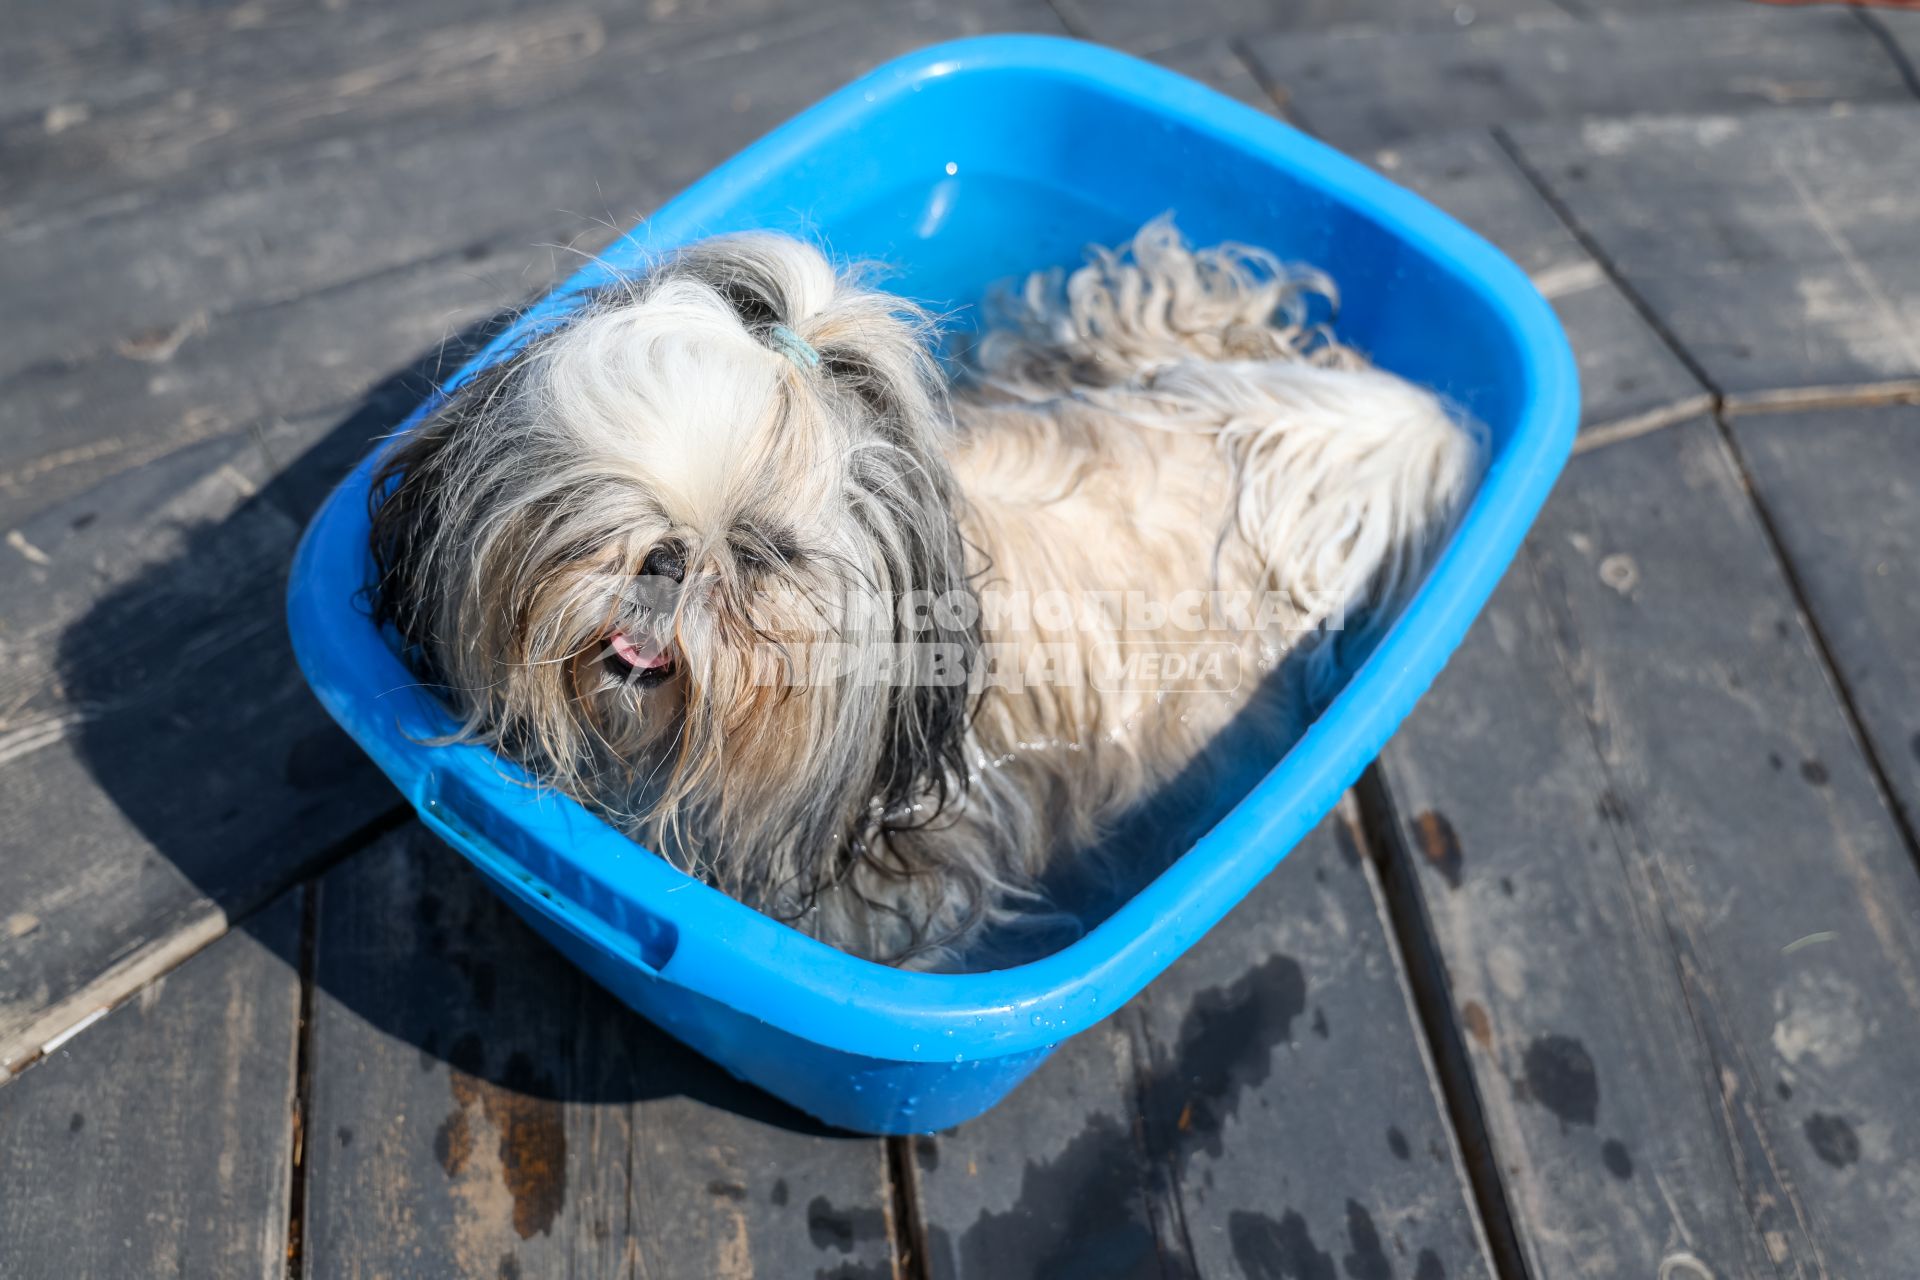 Красноярск. Собака сидит в тазу с водой.